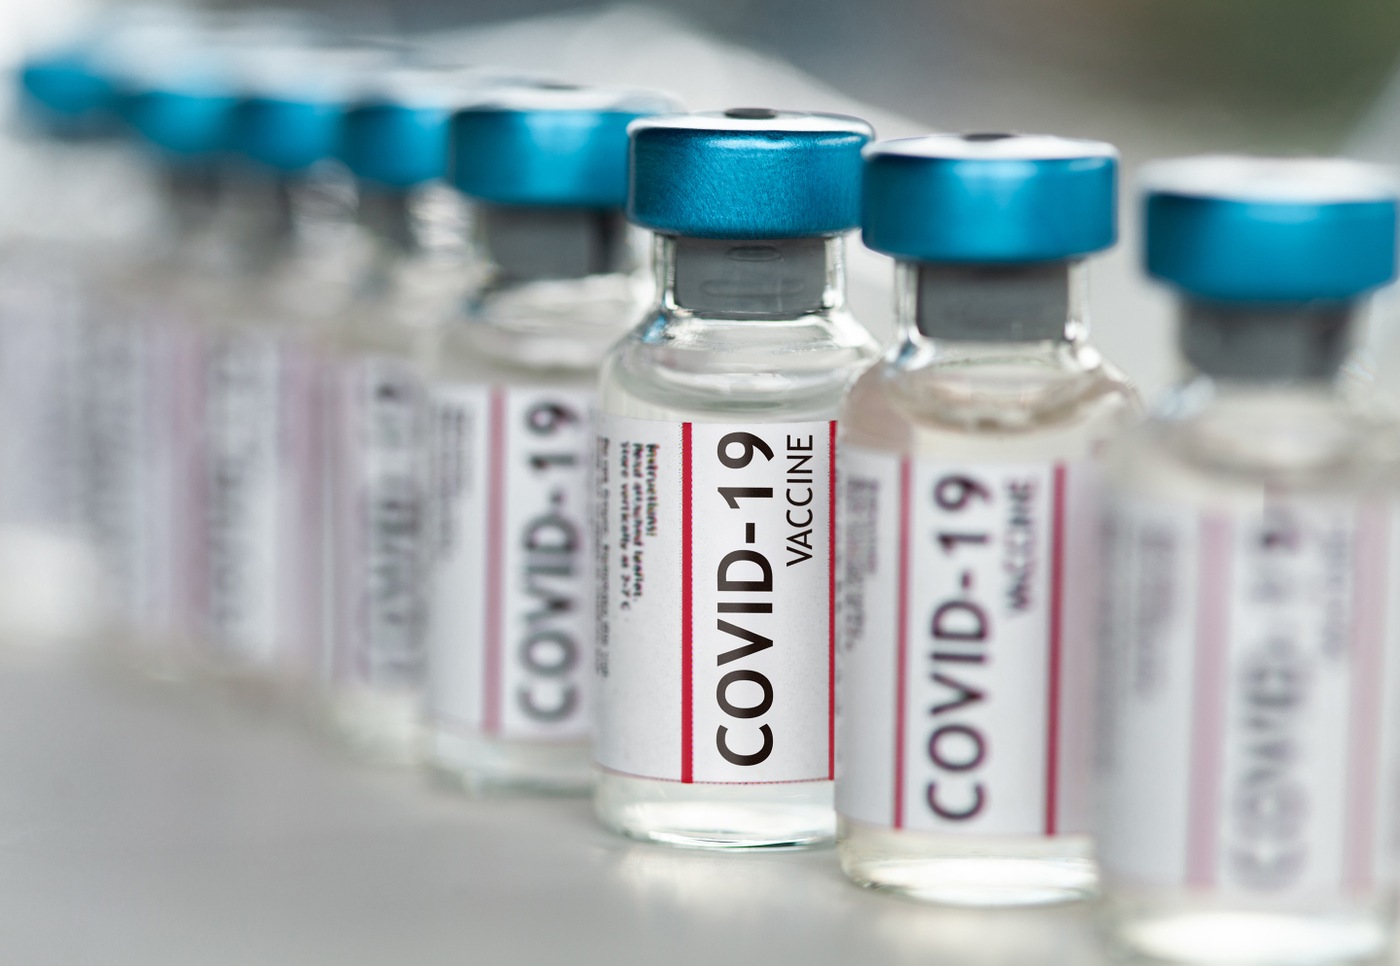 Photo of COVID-19 Vaccine bottles